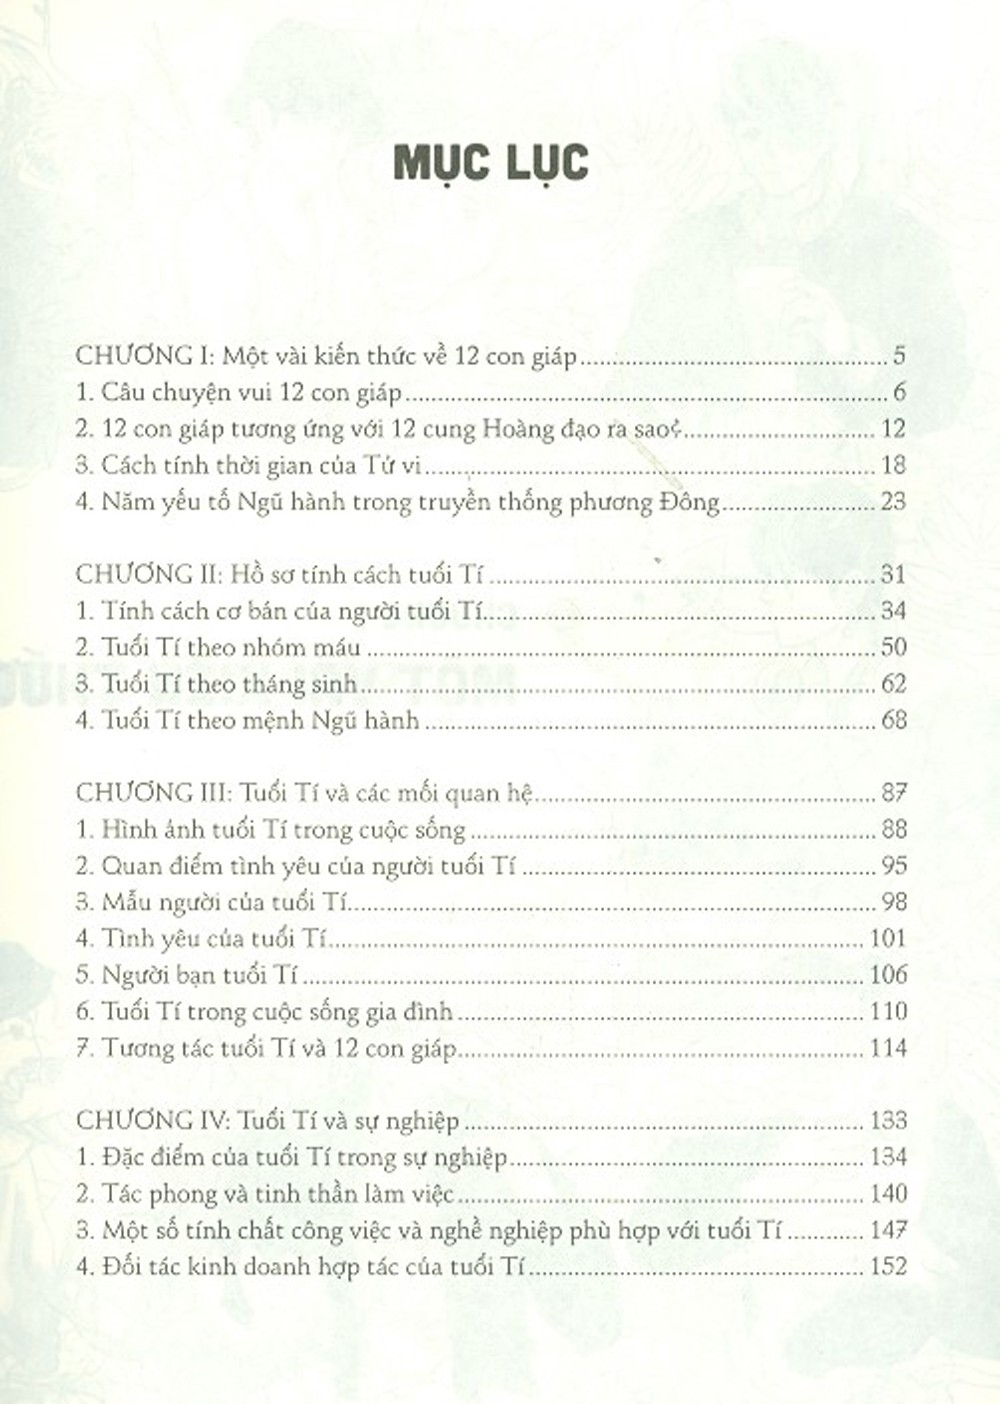 Hồ Sơ Tính Cách 12 Con Giáp - Bí Mật Tuổi Tí - Tặng Kèm Postcard PDF